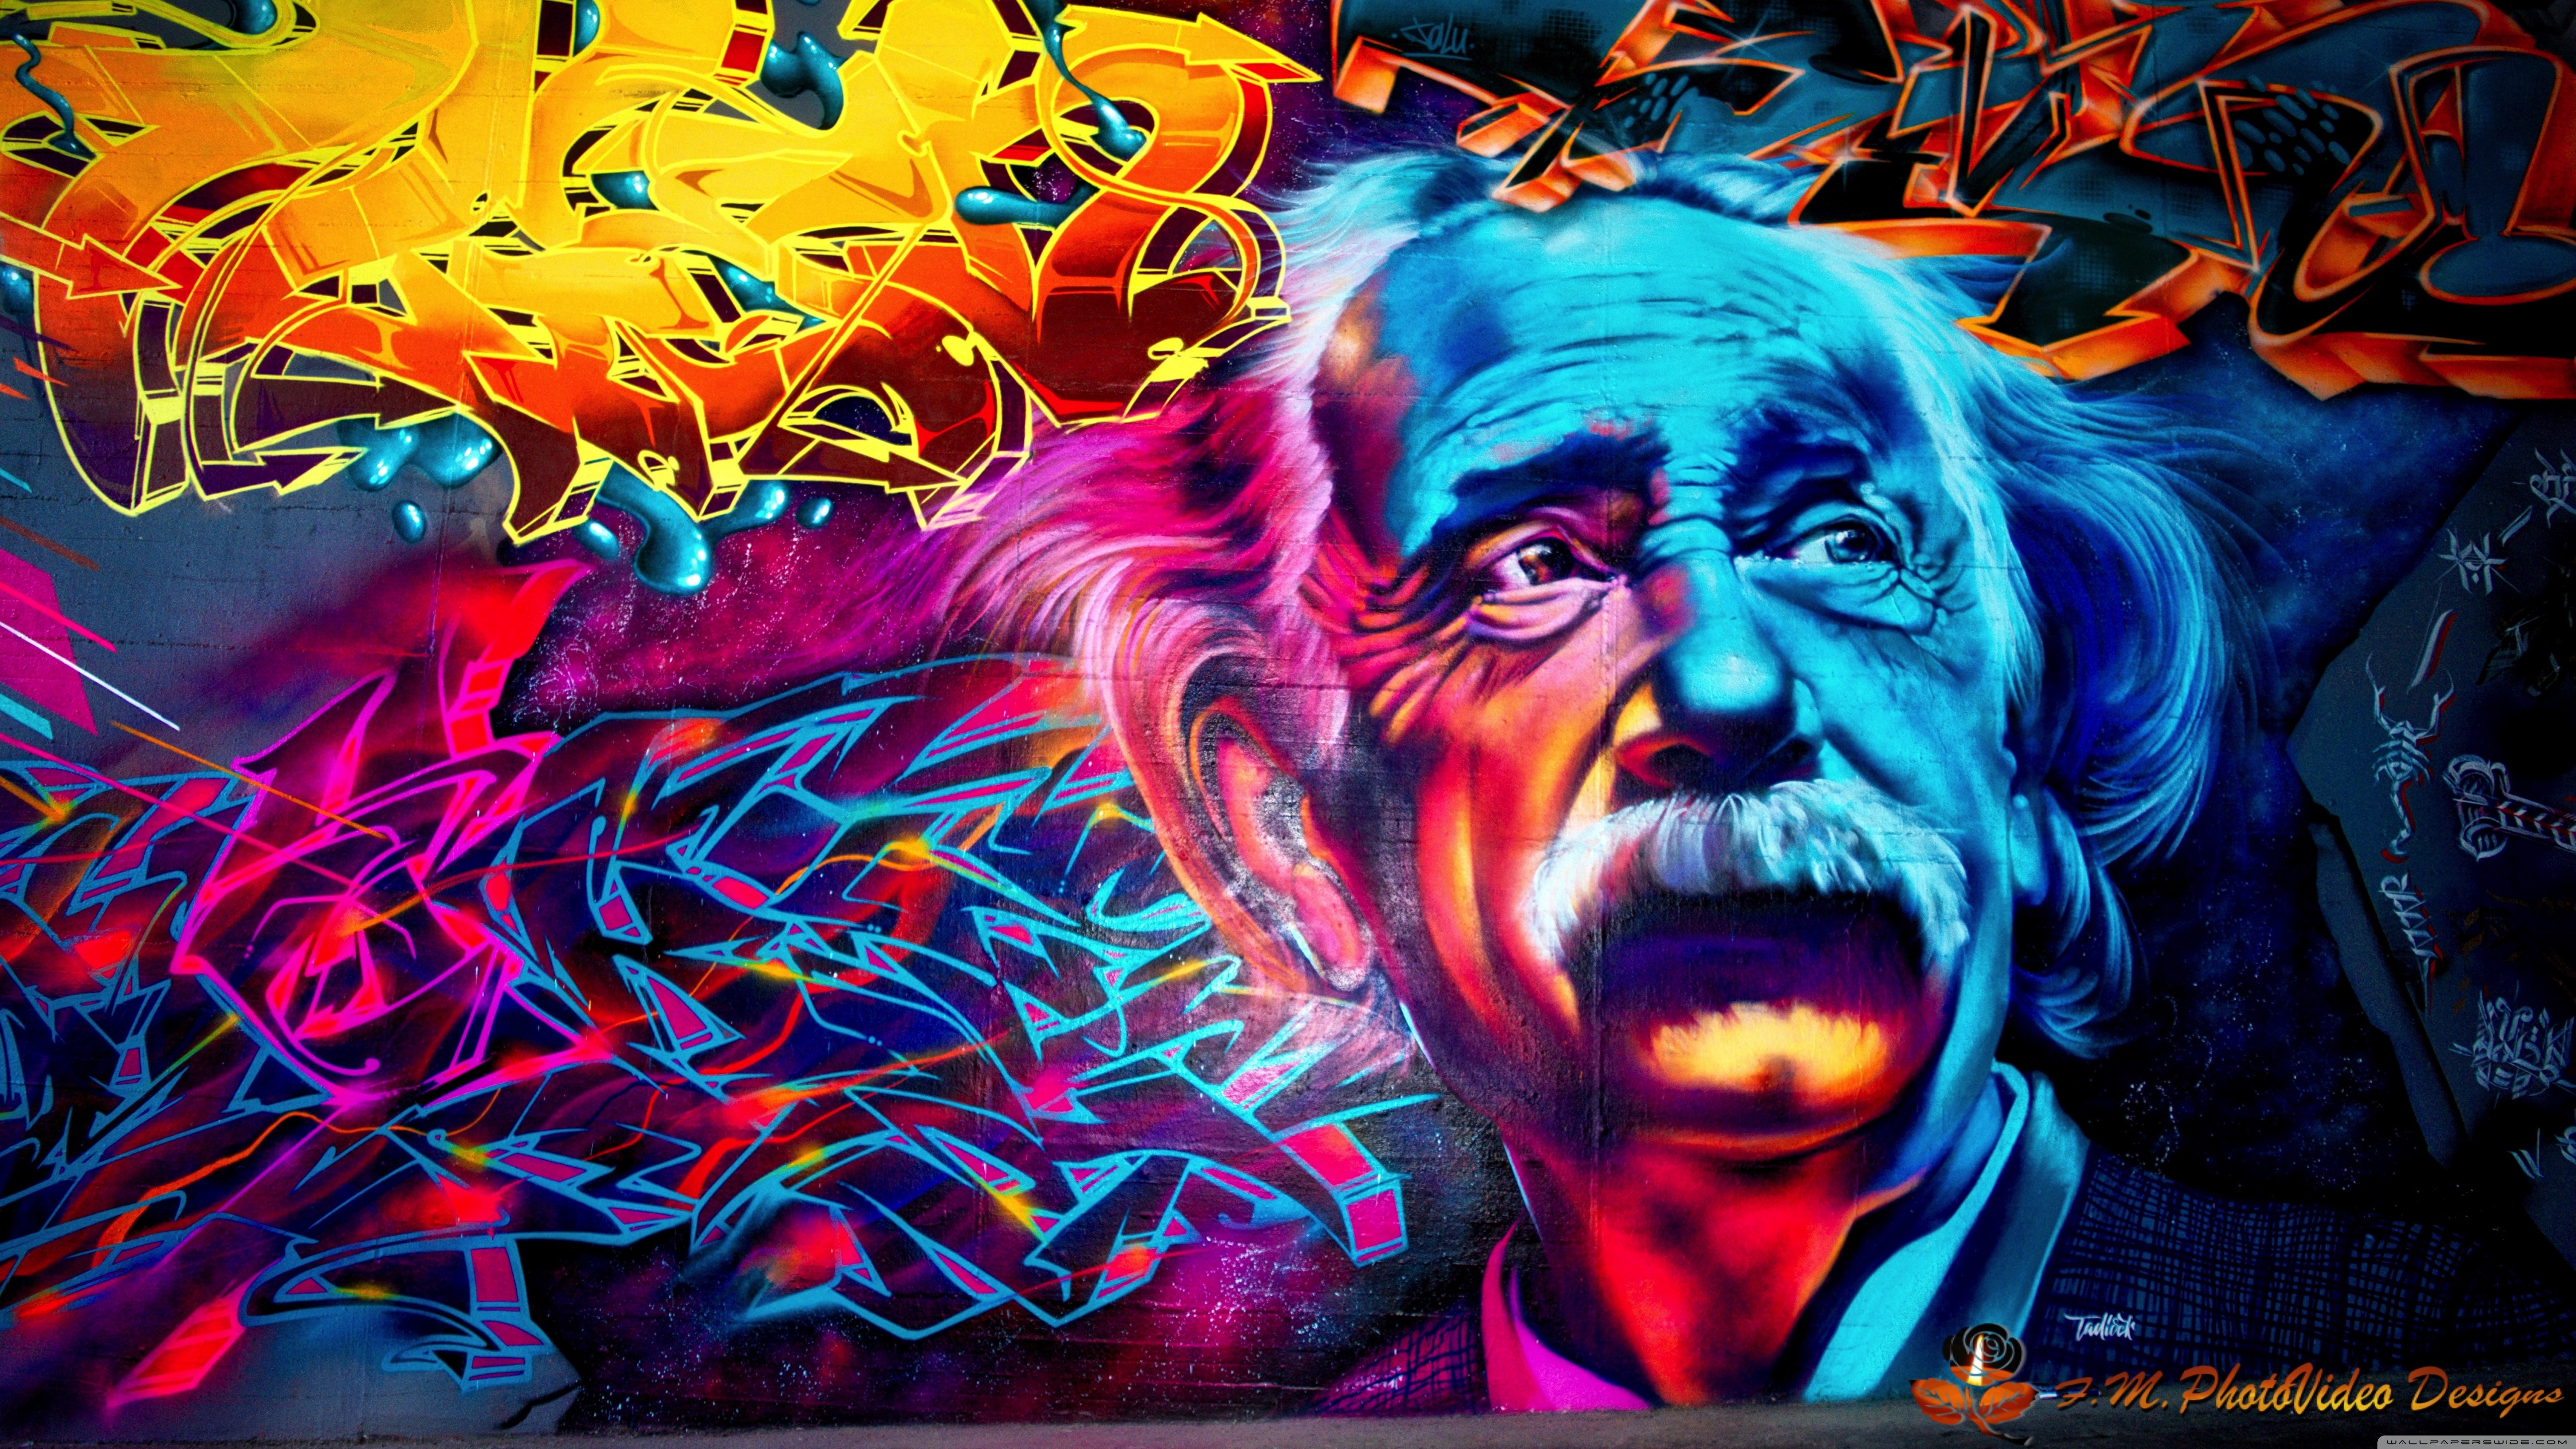 street art wallpaper,street art,art,graffiti,painting,psychedelic art